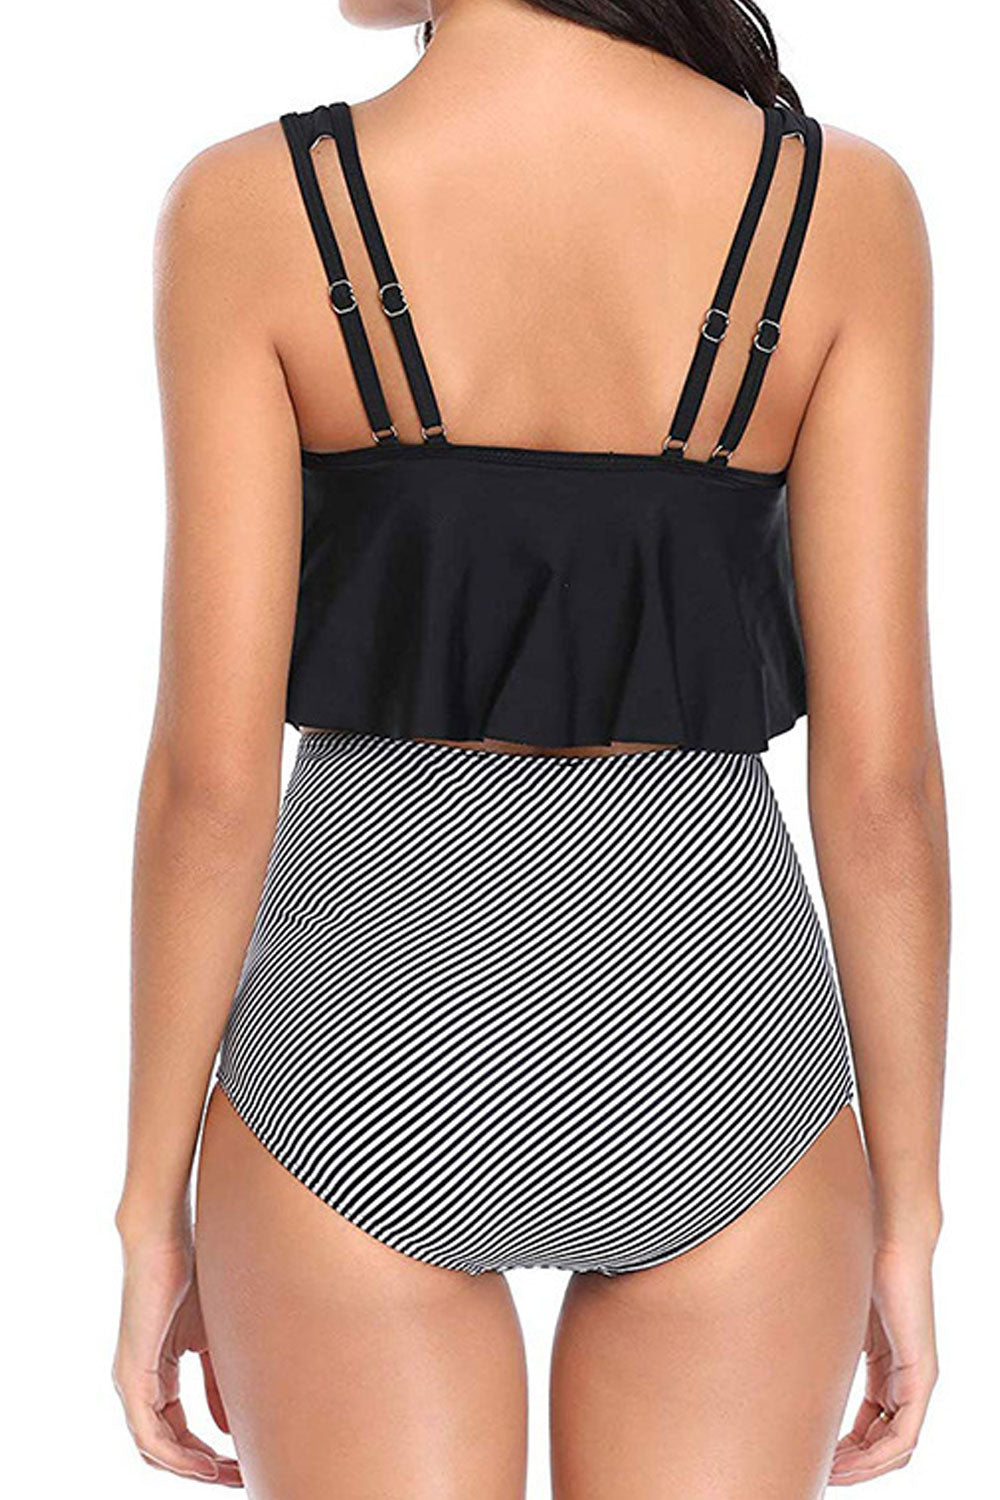 New bikini high waist pants printed large size split bikini swimsuit for women multi-color sexy women's swimsuit